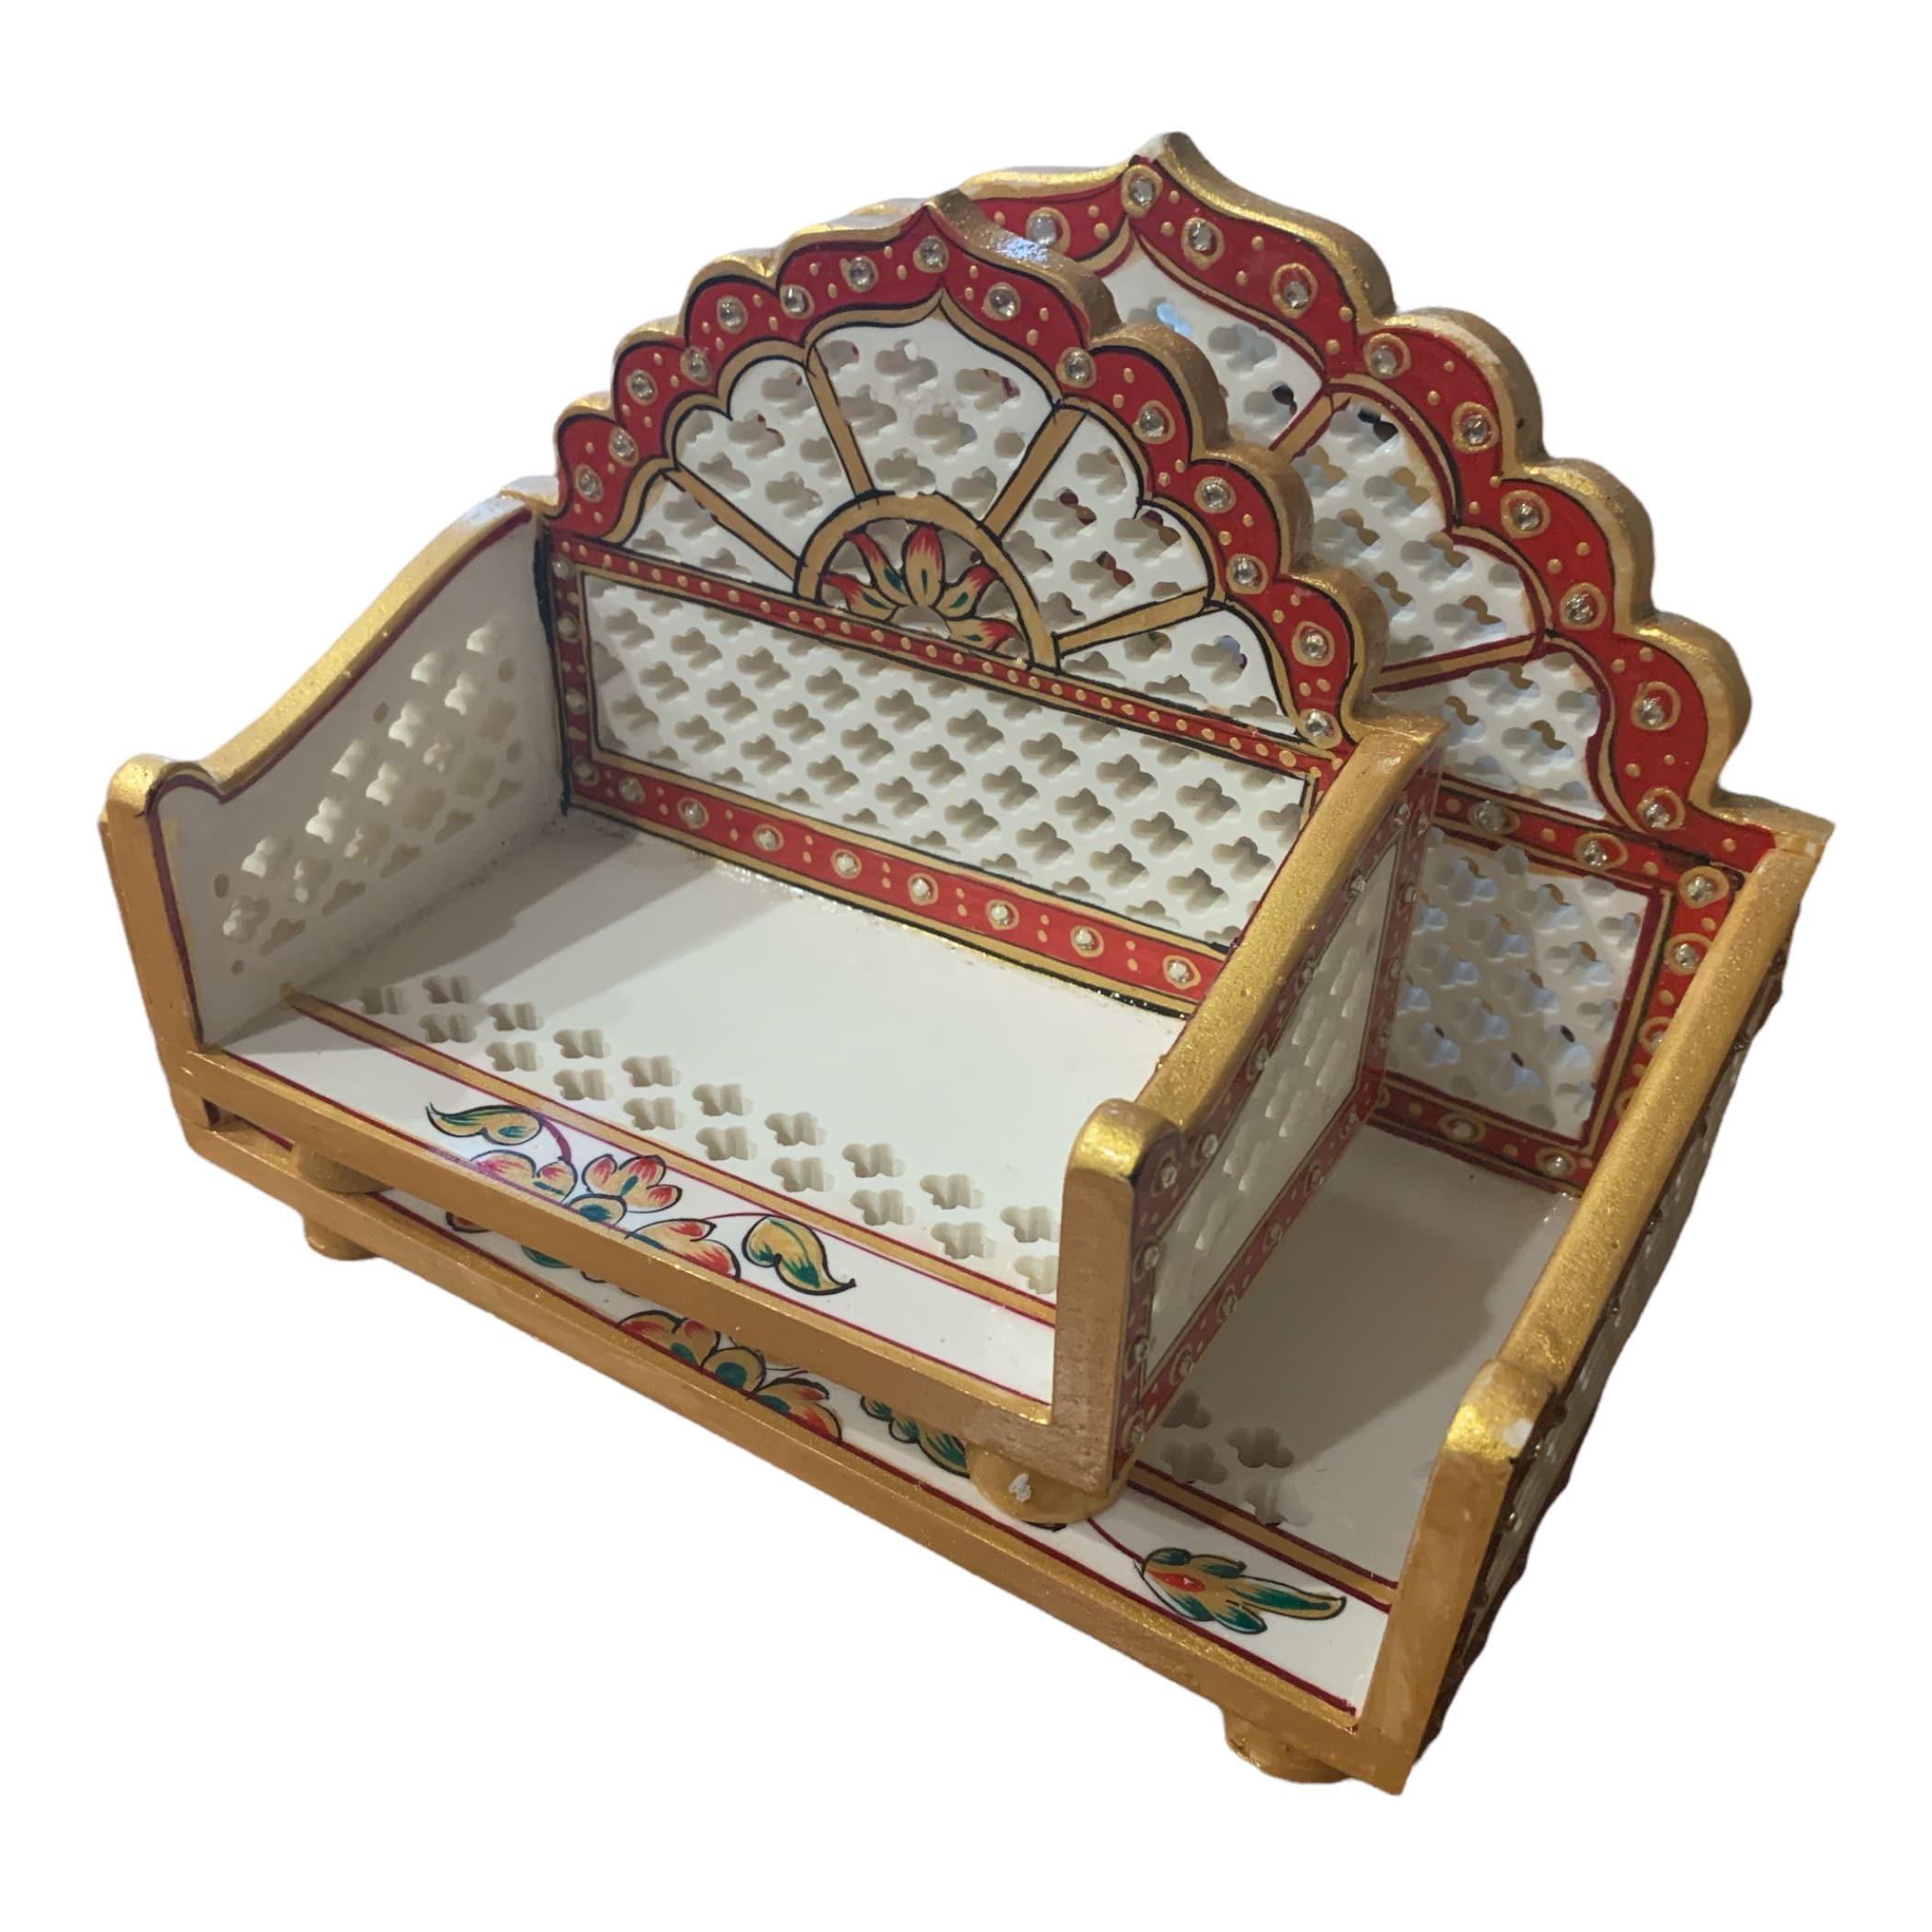 Acrylic laddu gopal sinhasan for pooja mandir kanha ji